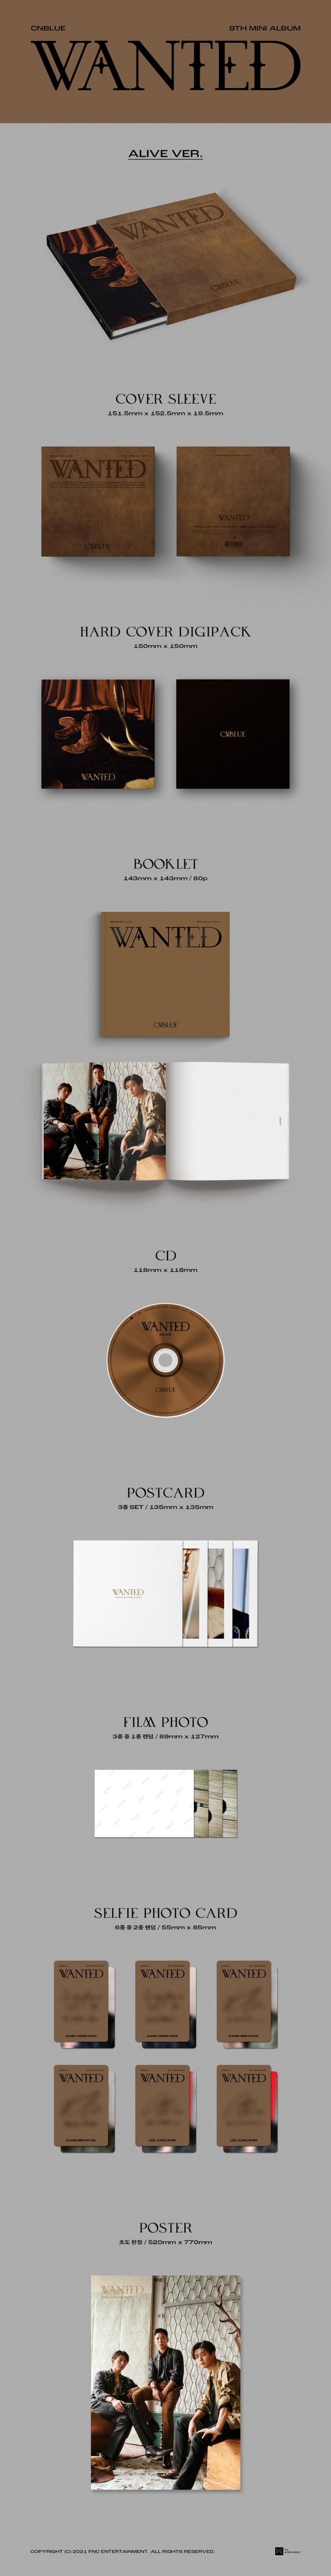 CNBLUE - WANTED - 9th Mini Album